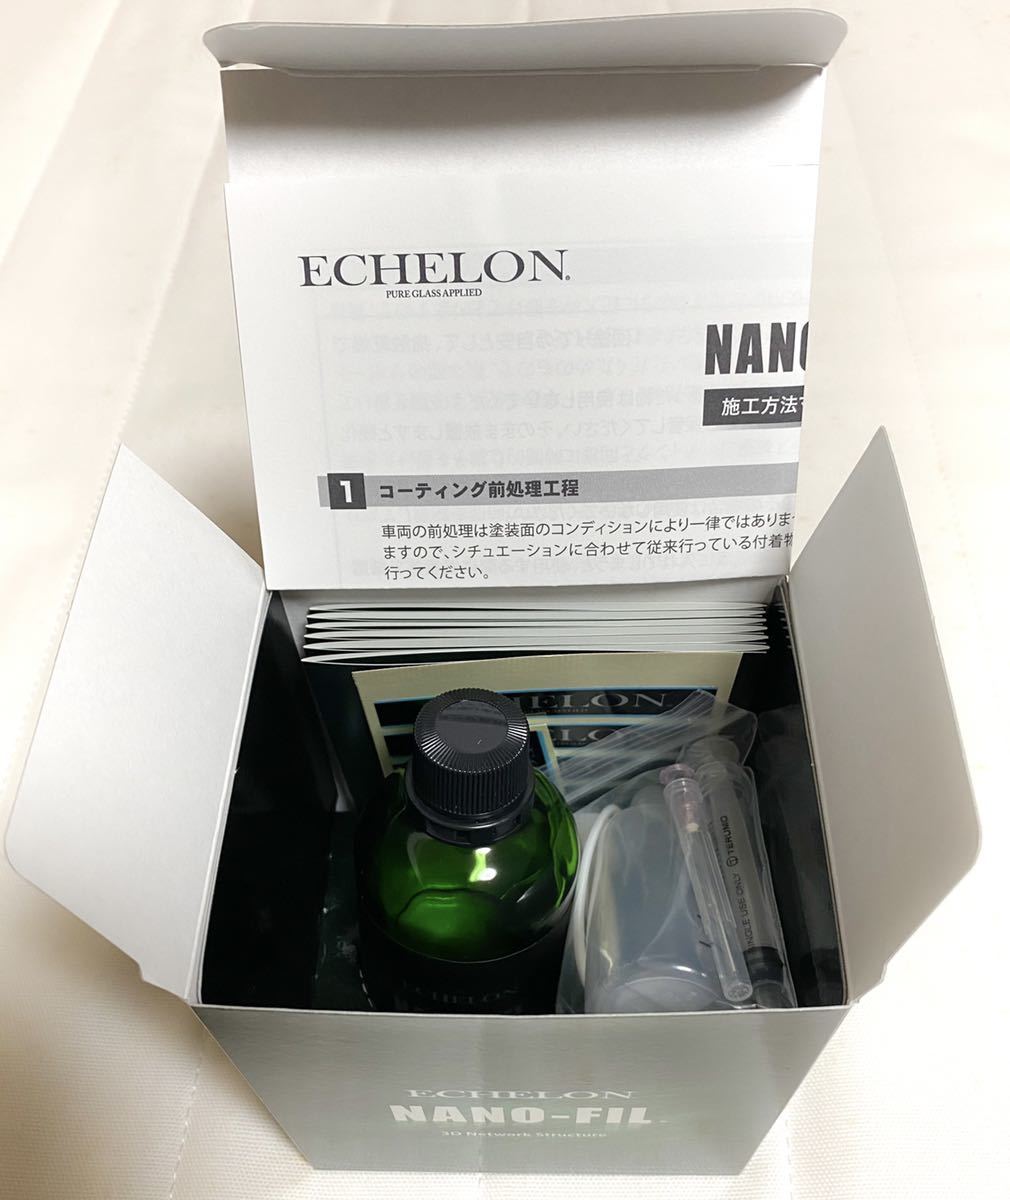 ECHELON NANO-FIL 90ml コーティング剤 エシュロン_画像2